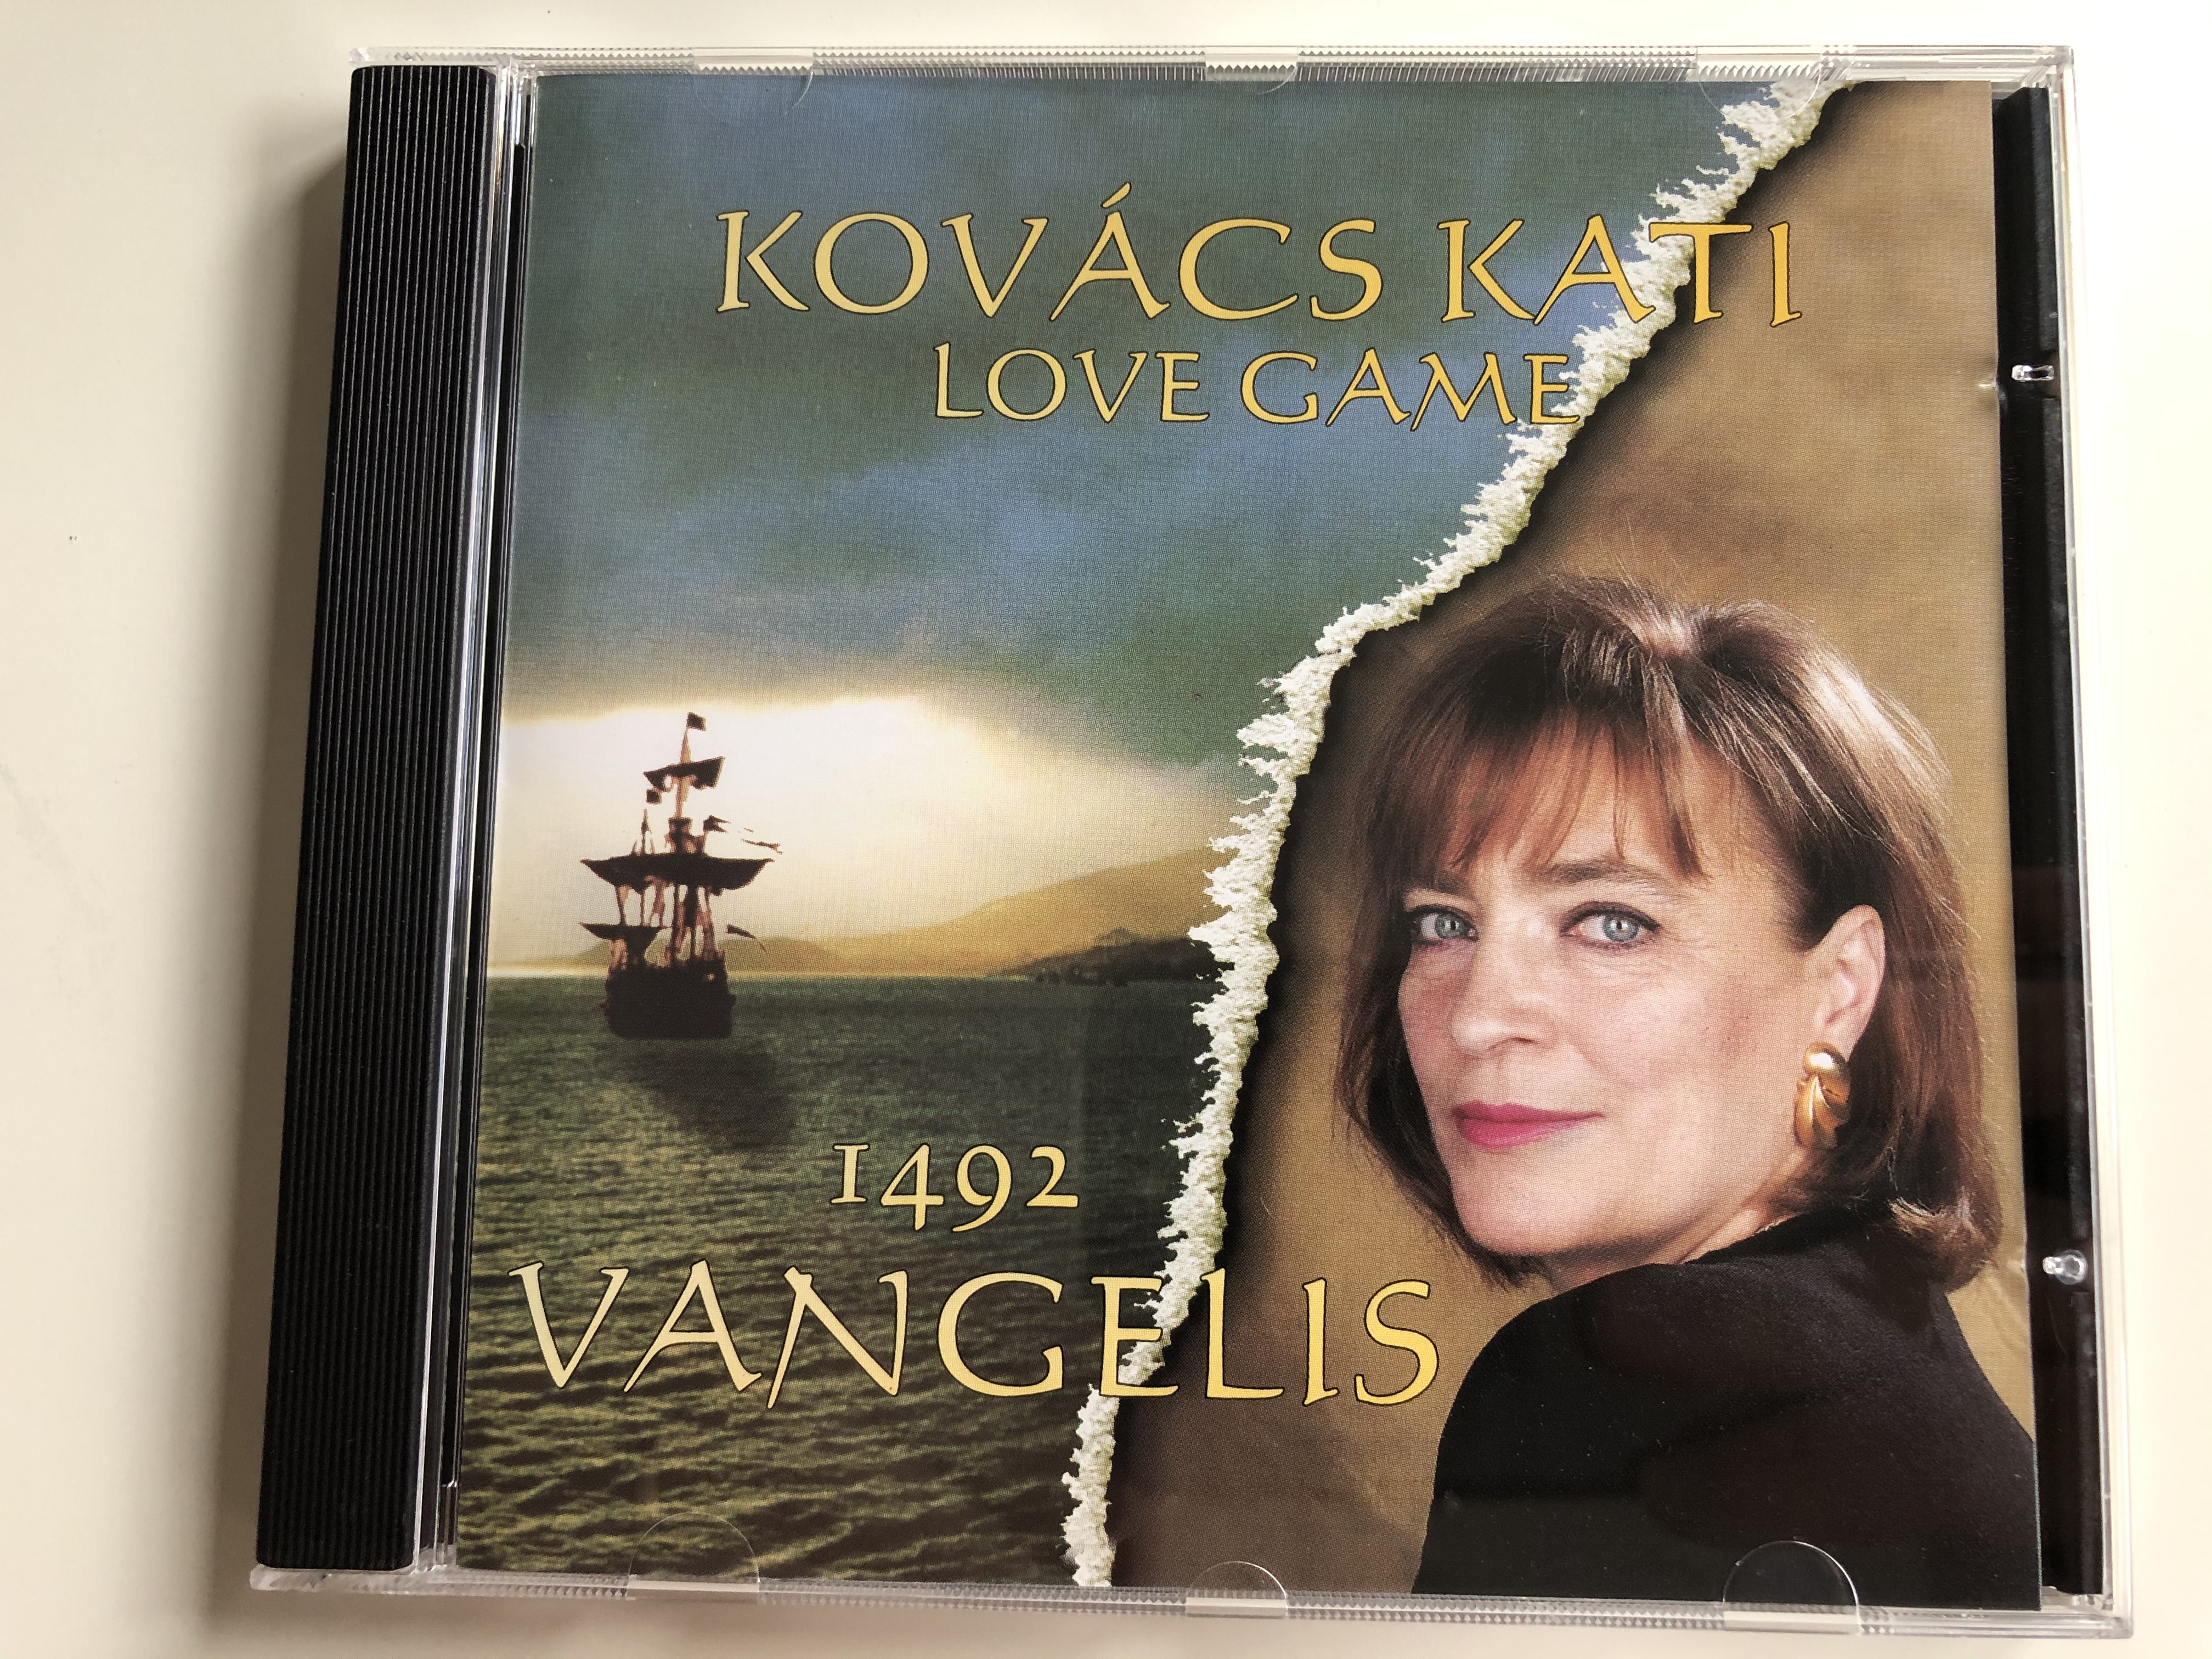 kov-cs-kati-love-game-vangelis-1492-ka-ti-bt.-audio-cd-kk-cd-001-1-.jpg